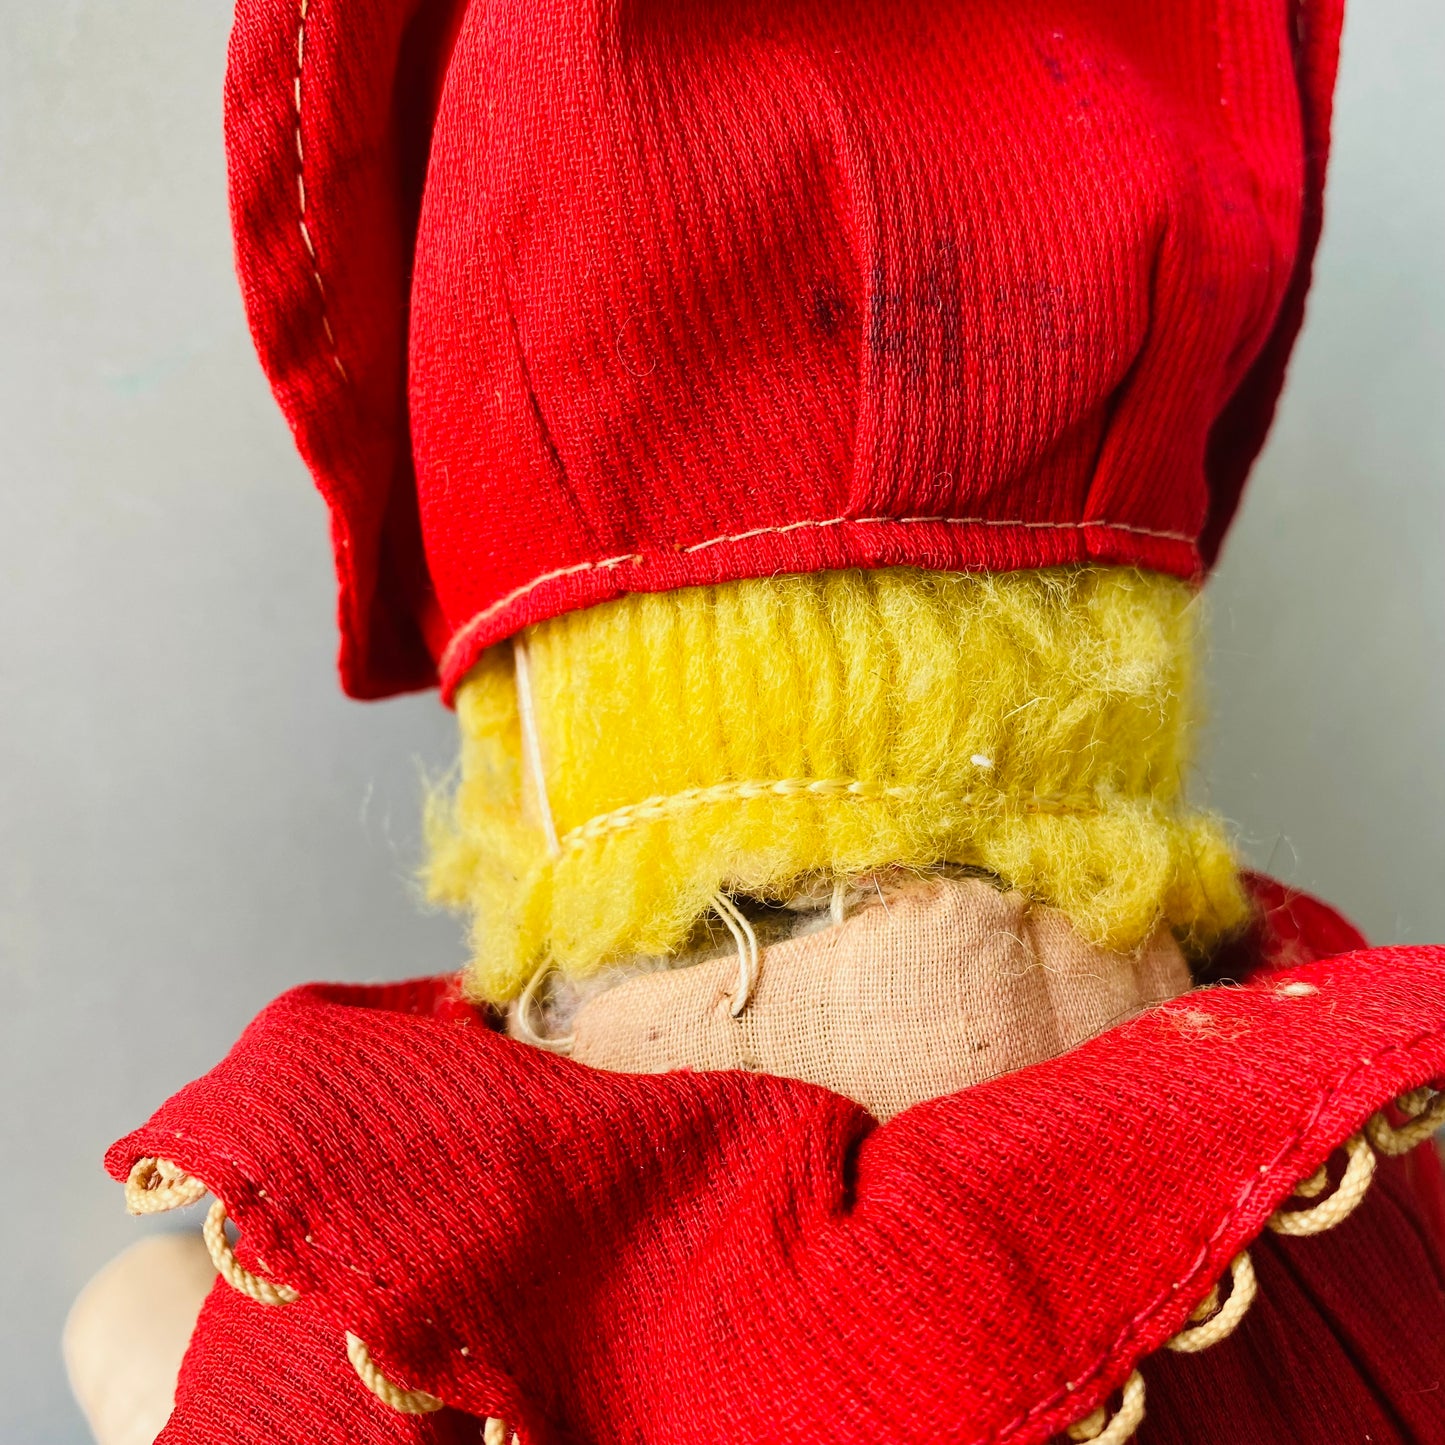 【1940s USA vintage】Little Red Riding Hood vintage doll